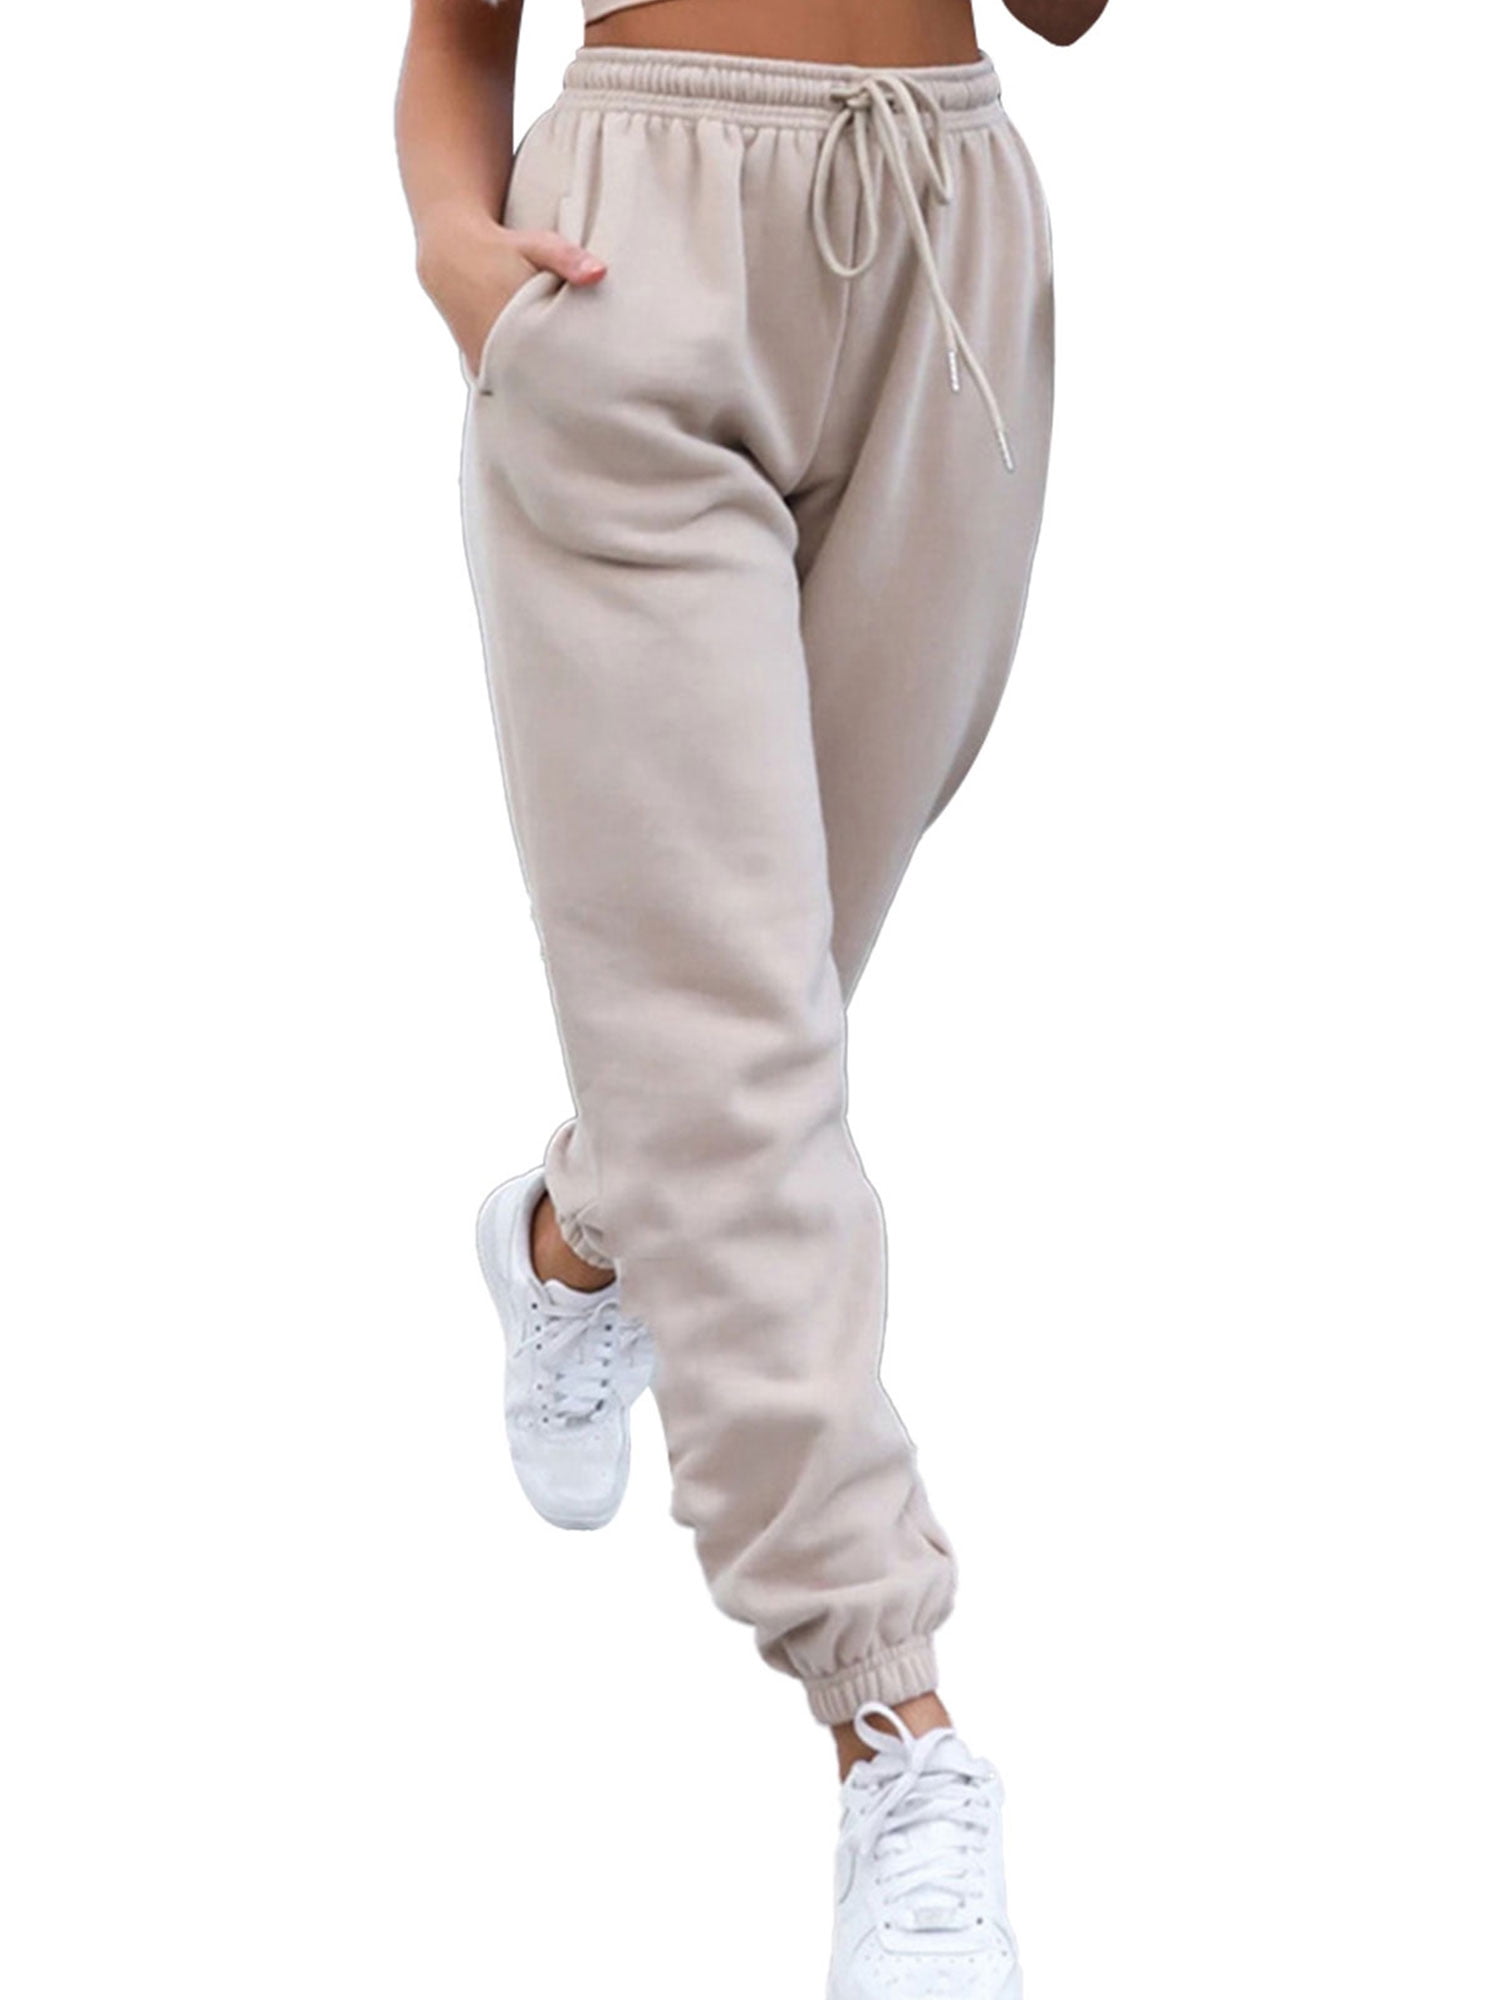 Canrulo Women's Sweatpants Drawstring Jogger Pants Cinch Bottom